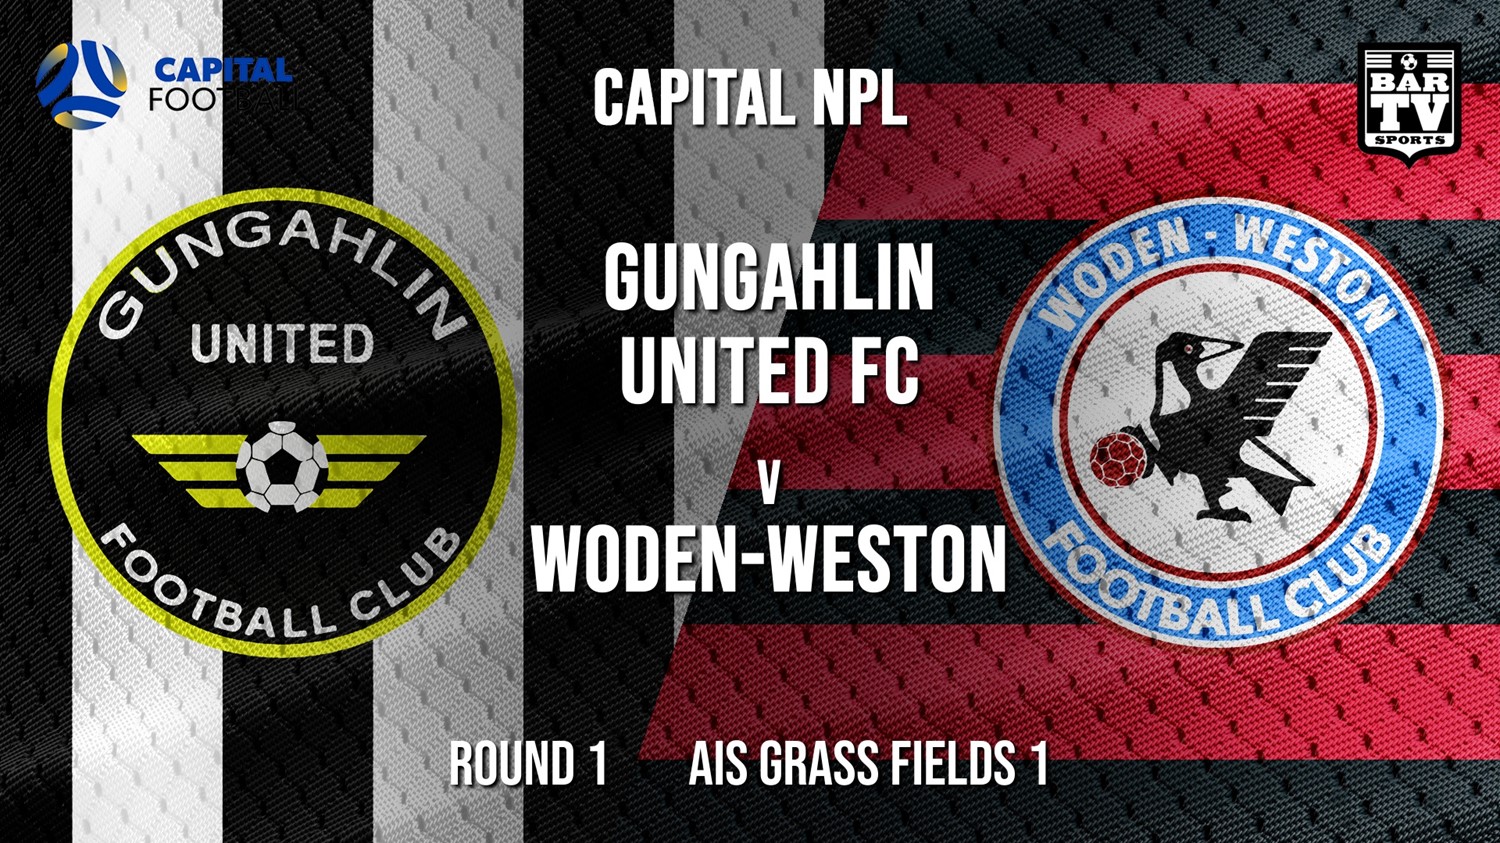 NPL - Capital Round 1 - Gungahlin United FC v Woden-Weston FC Minigame Slate Image